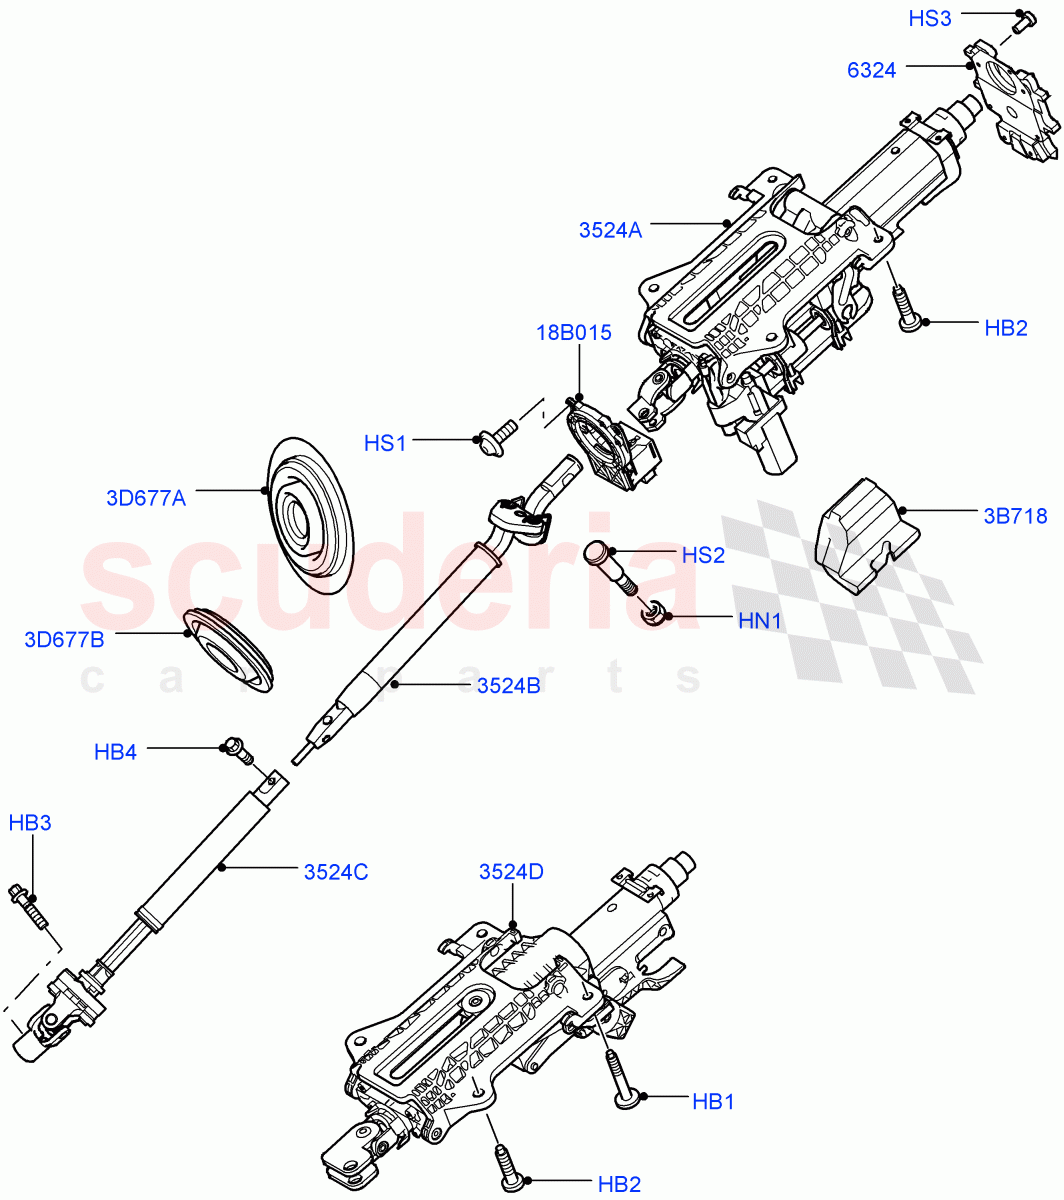 Steering Column((V)TO9A999999) of Land Rover Land Rover Range Rover Sport (2005-2009) [3.6 V8 32V DOHC EFI Diesel]